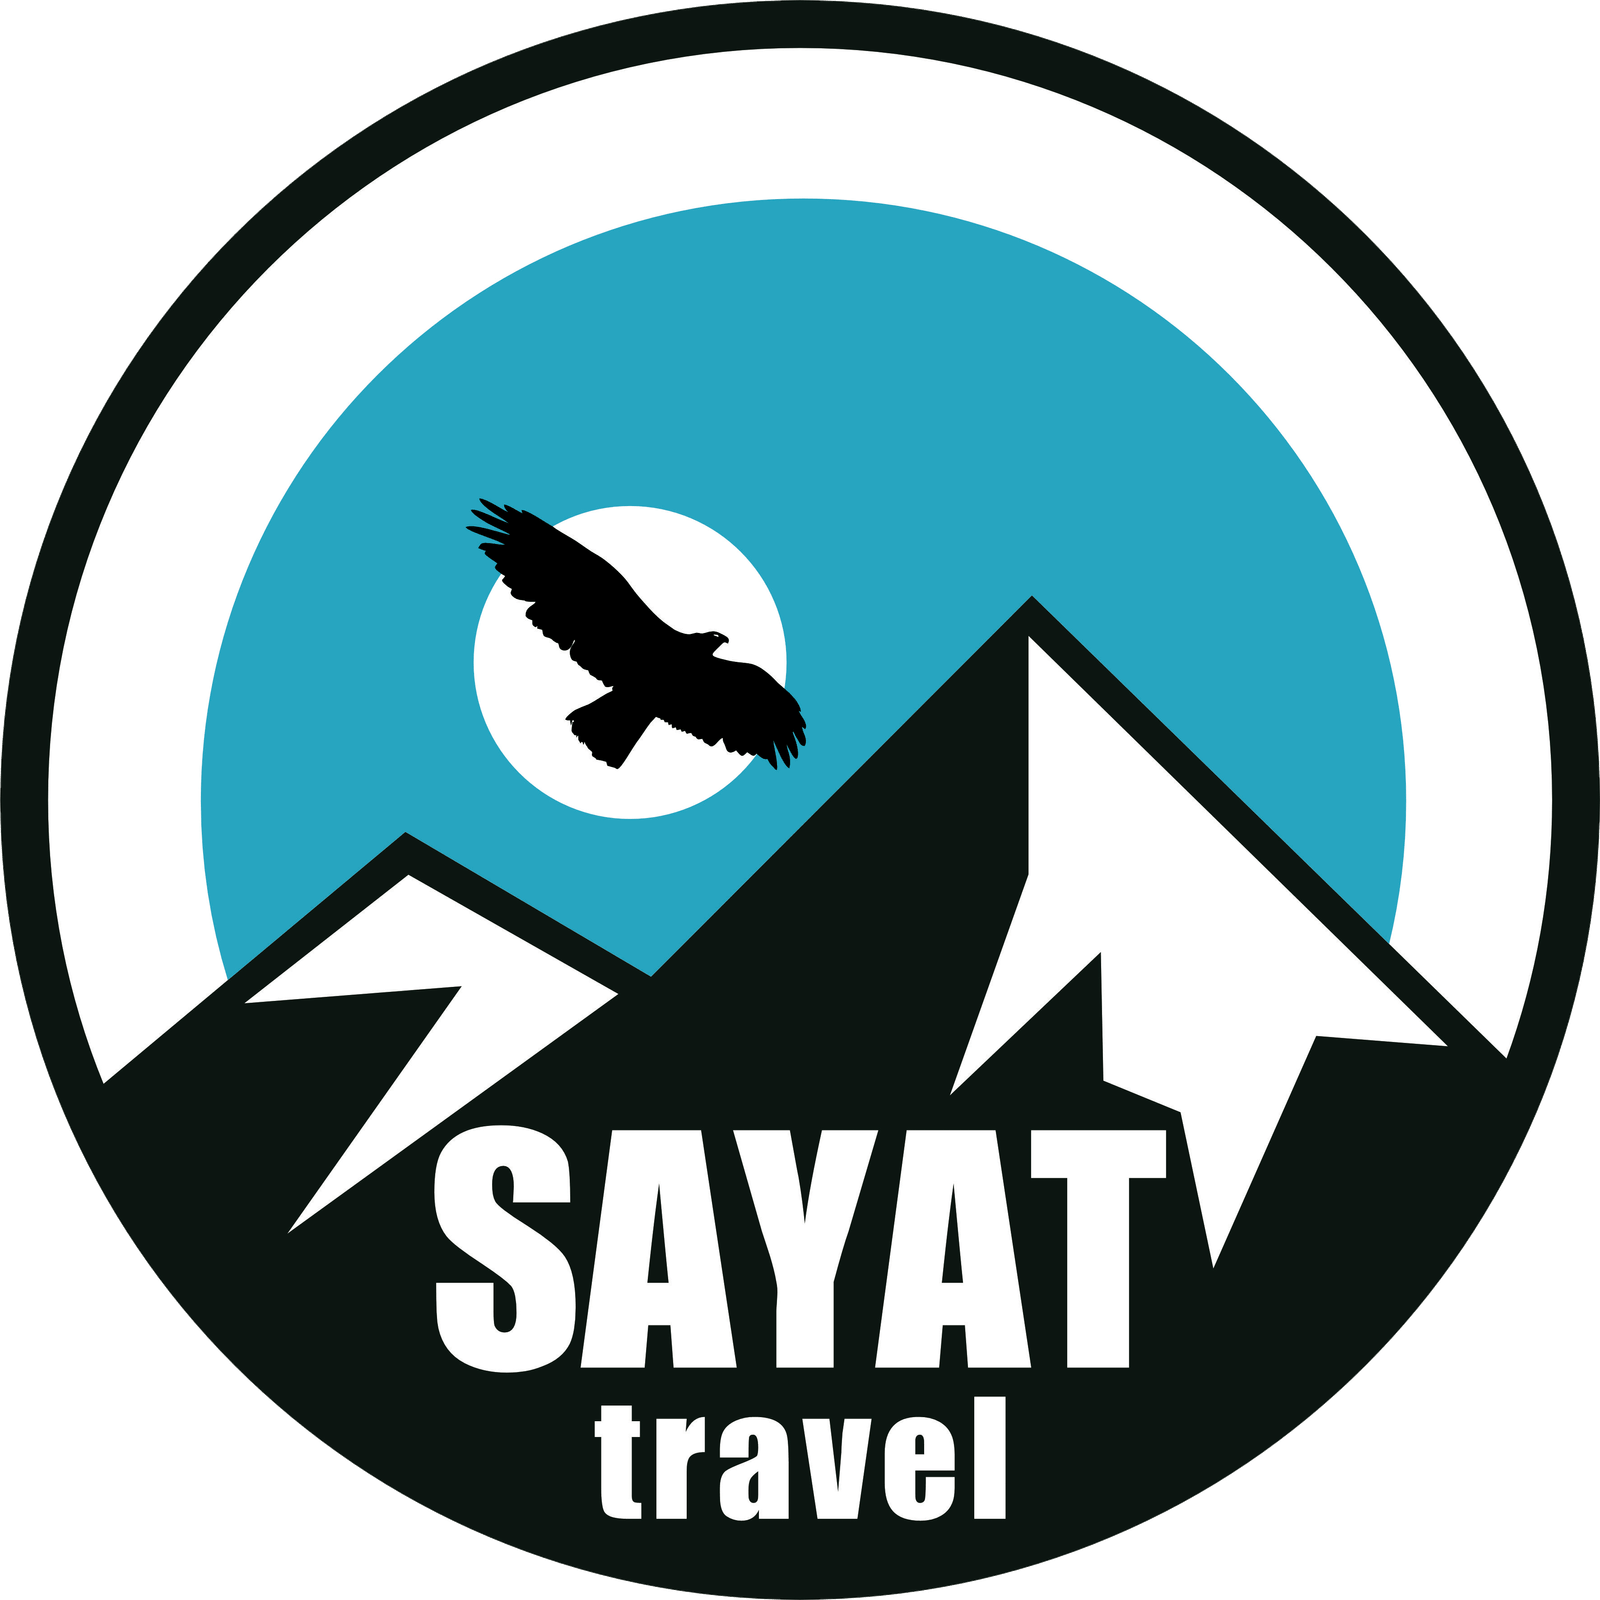 Sayat travel western Mongolia tour operator